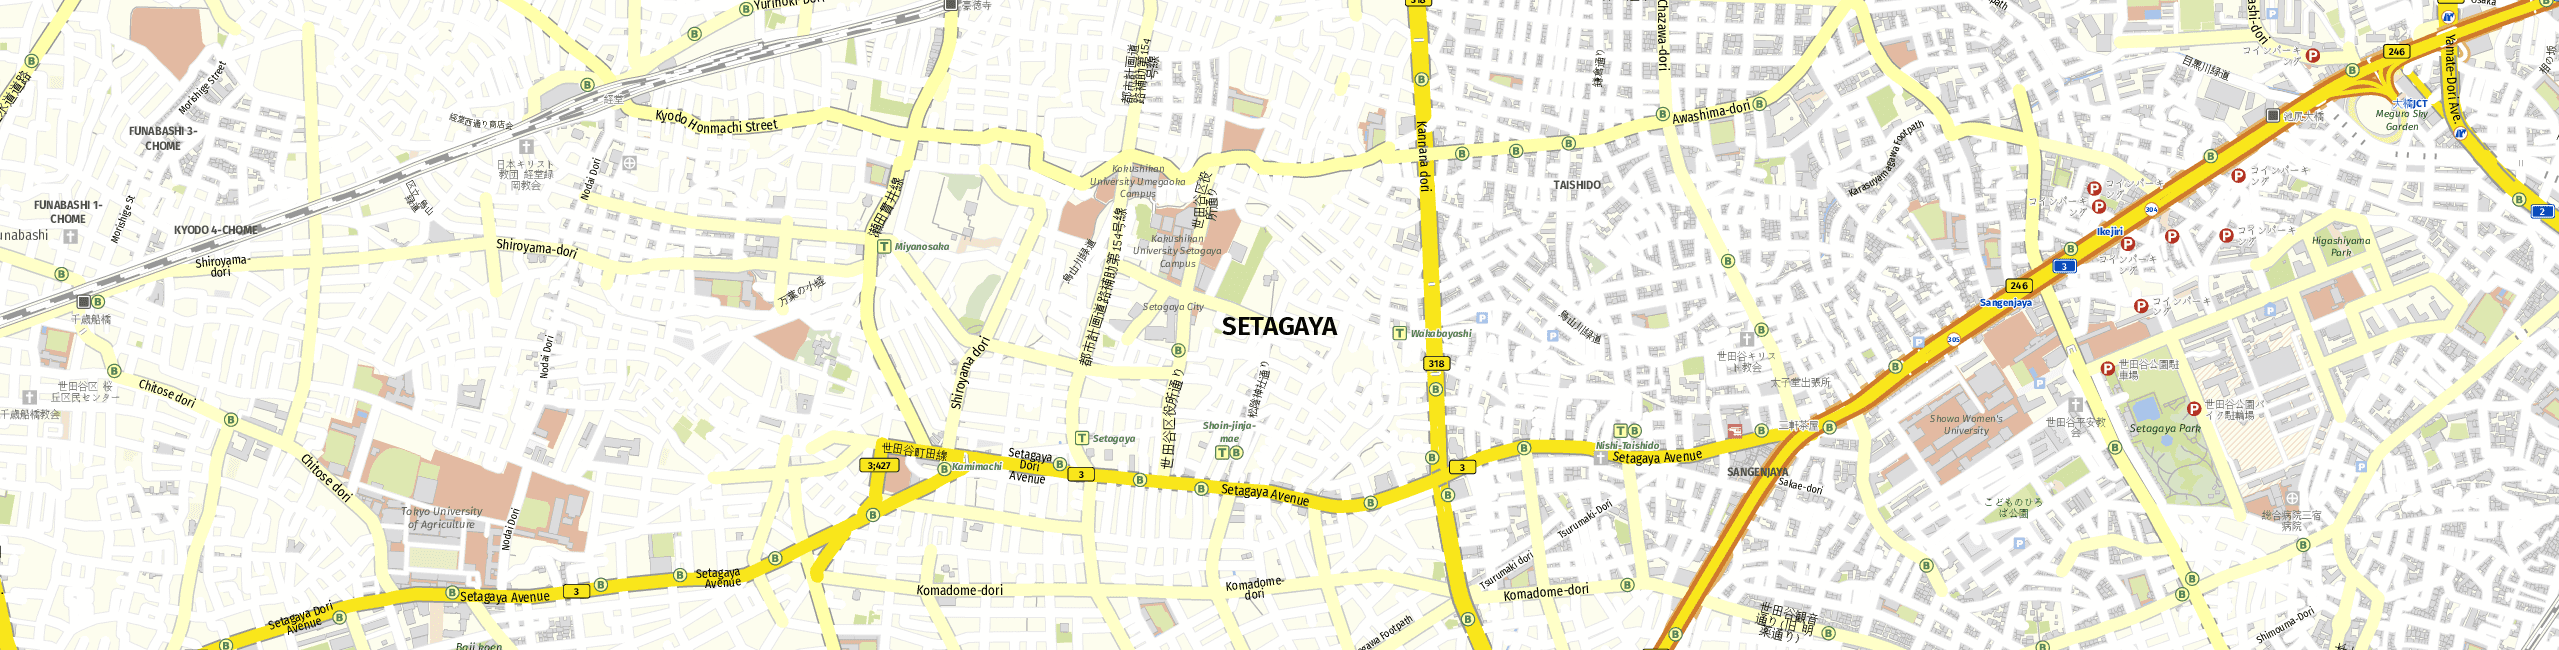 Stadtplan Setagaya zum Downloaden.